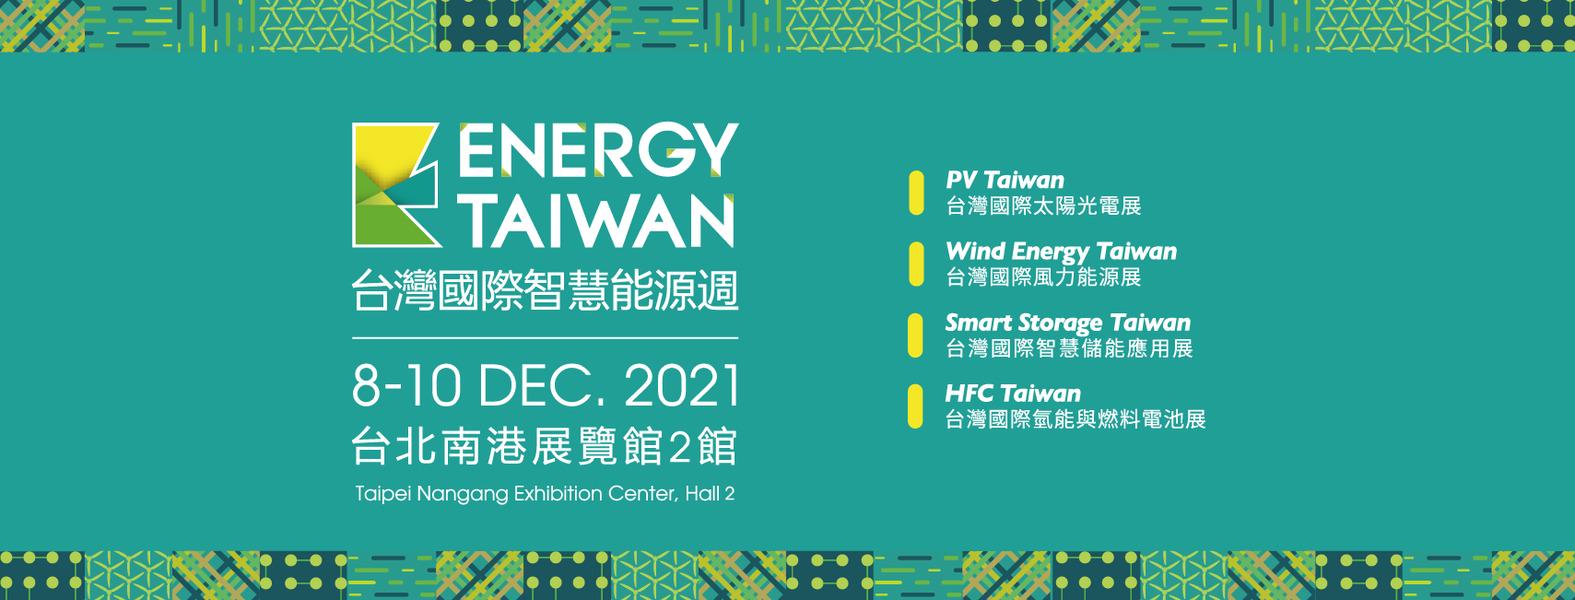 Environmental Awareness, Sustainable Development, Energy Saving and Carbon Reduction, Renewable Energy, Wind Power, KingOne, Wang Yi Design, Taiwan International Smart Energy Week, EnergyTaiwan